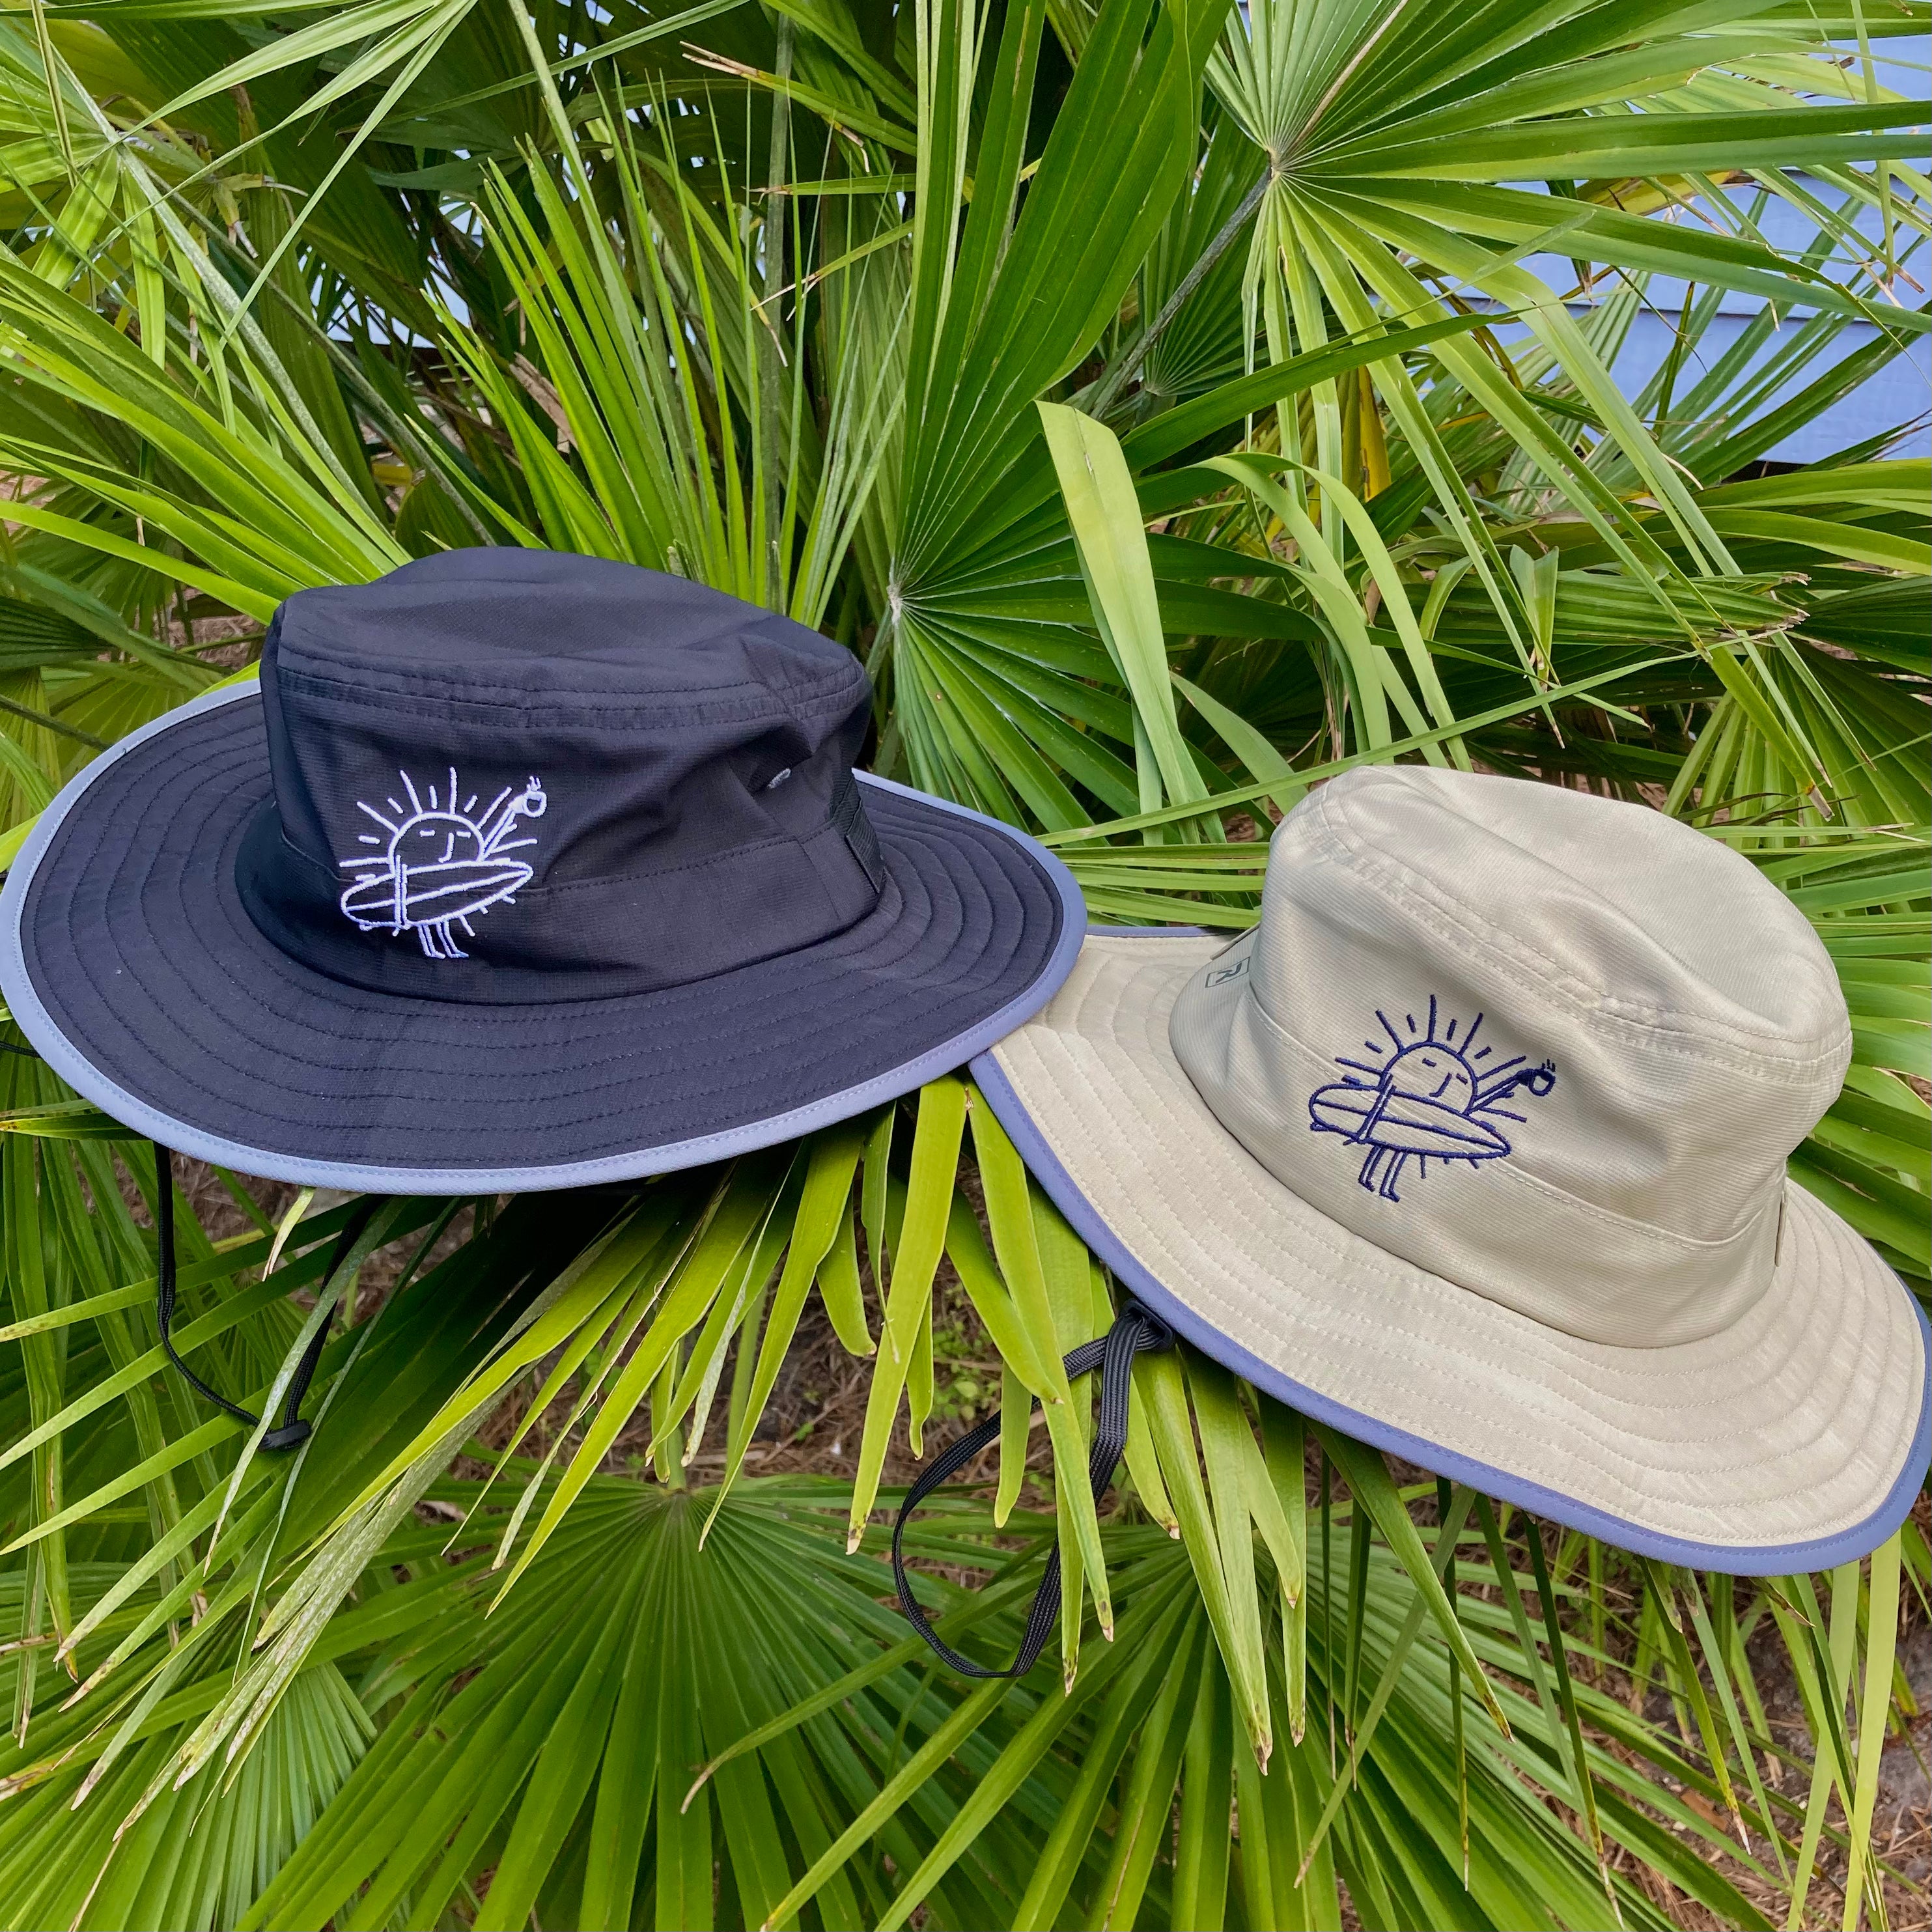 Sunrise Crew' UPF Bucket Hats